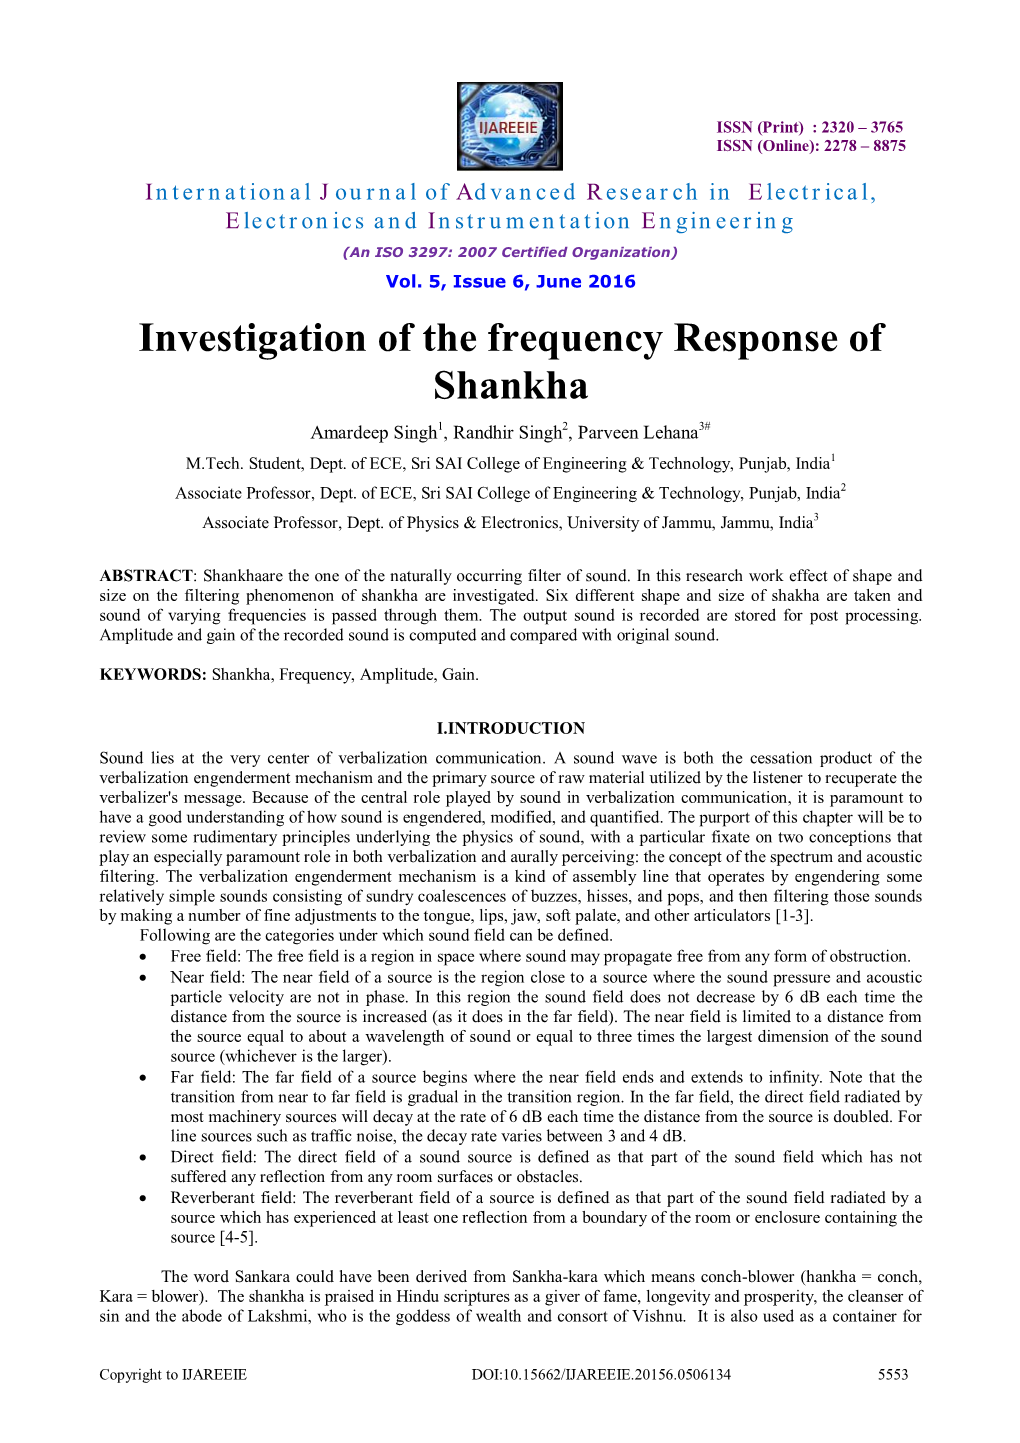 Investigation of the Frequency Response of Shankha Amardeep Singh1, Randhir Singh2, Parveen Lehana3# M.Tech